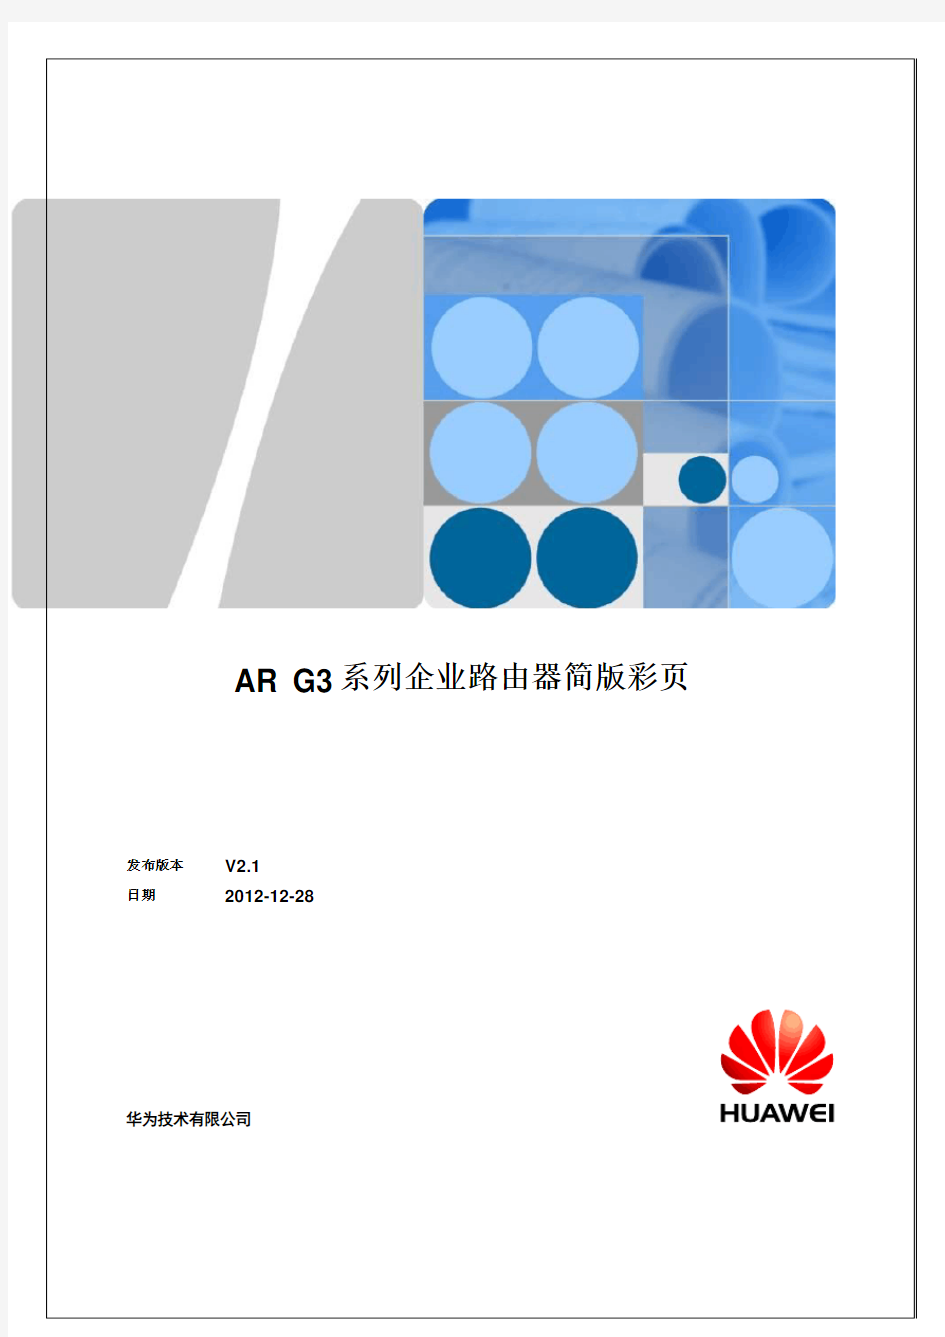 Huawei AR150&AR200&AR1200&AR2200&AR3200系列企业路由器产品族 简版彩页 (2012-10-18)